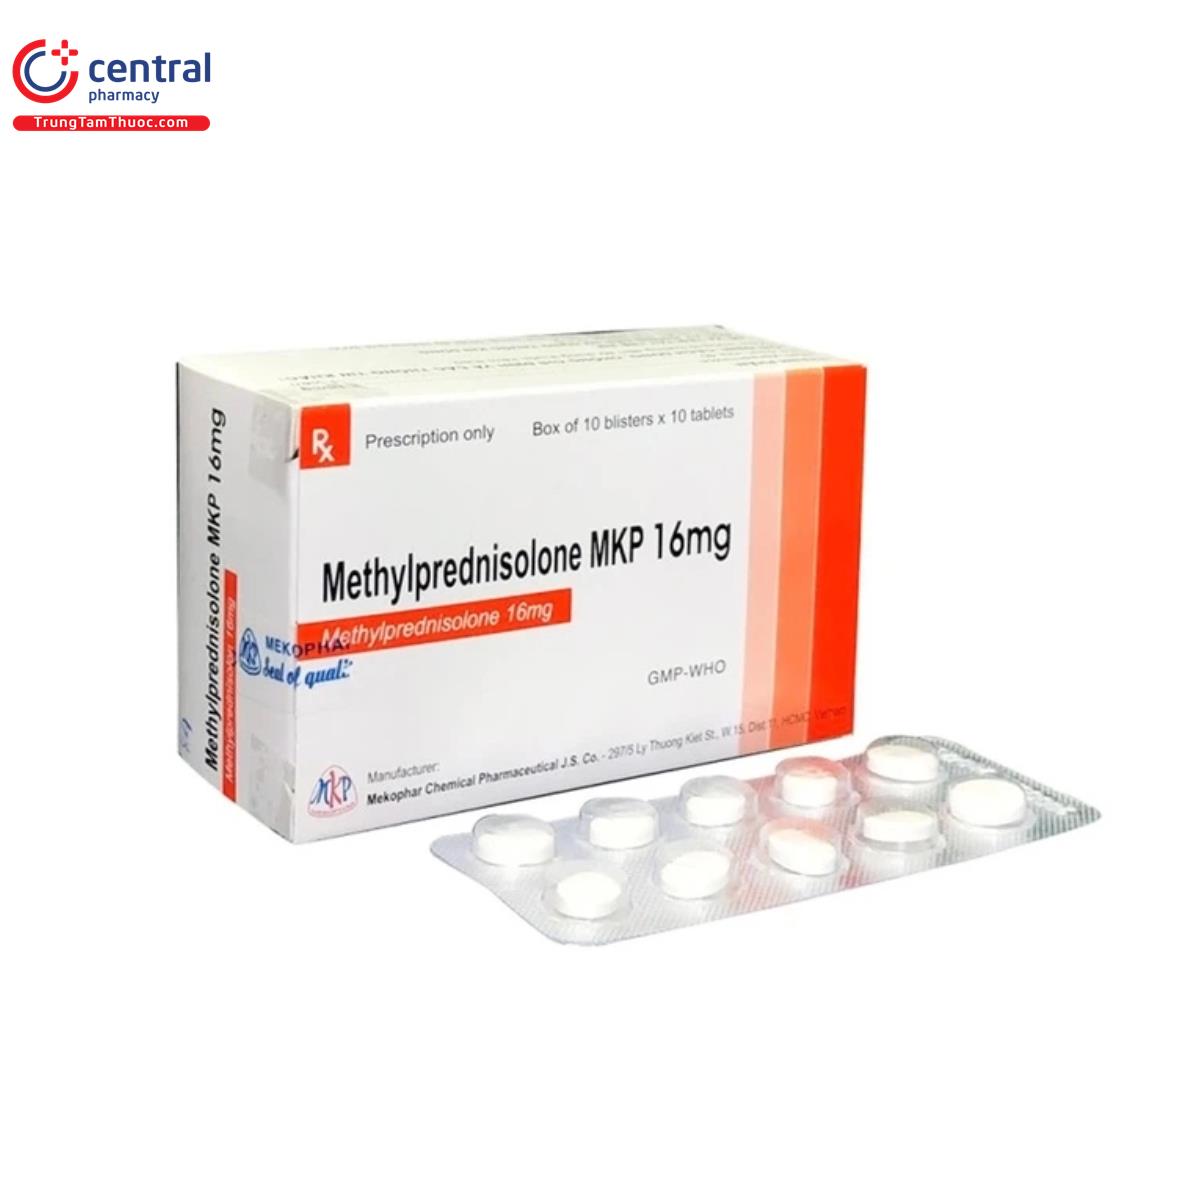 methylprednisolone mkp 16mg 1 R7466